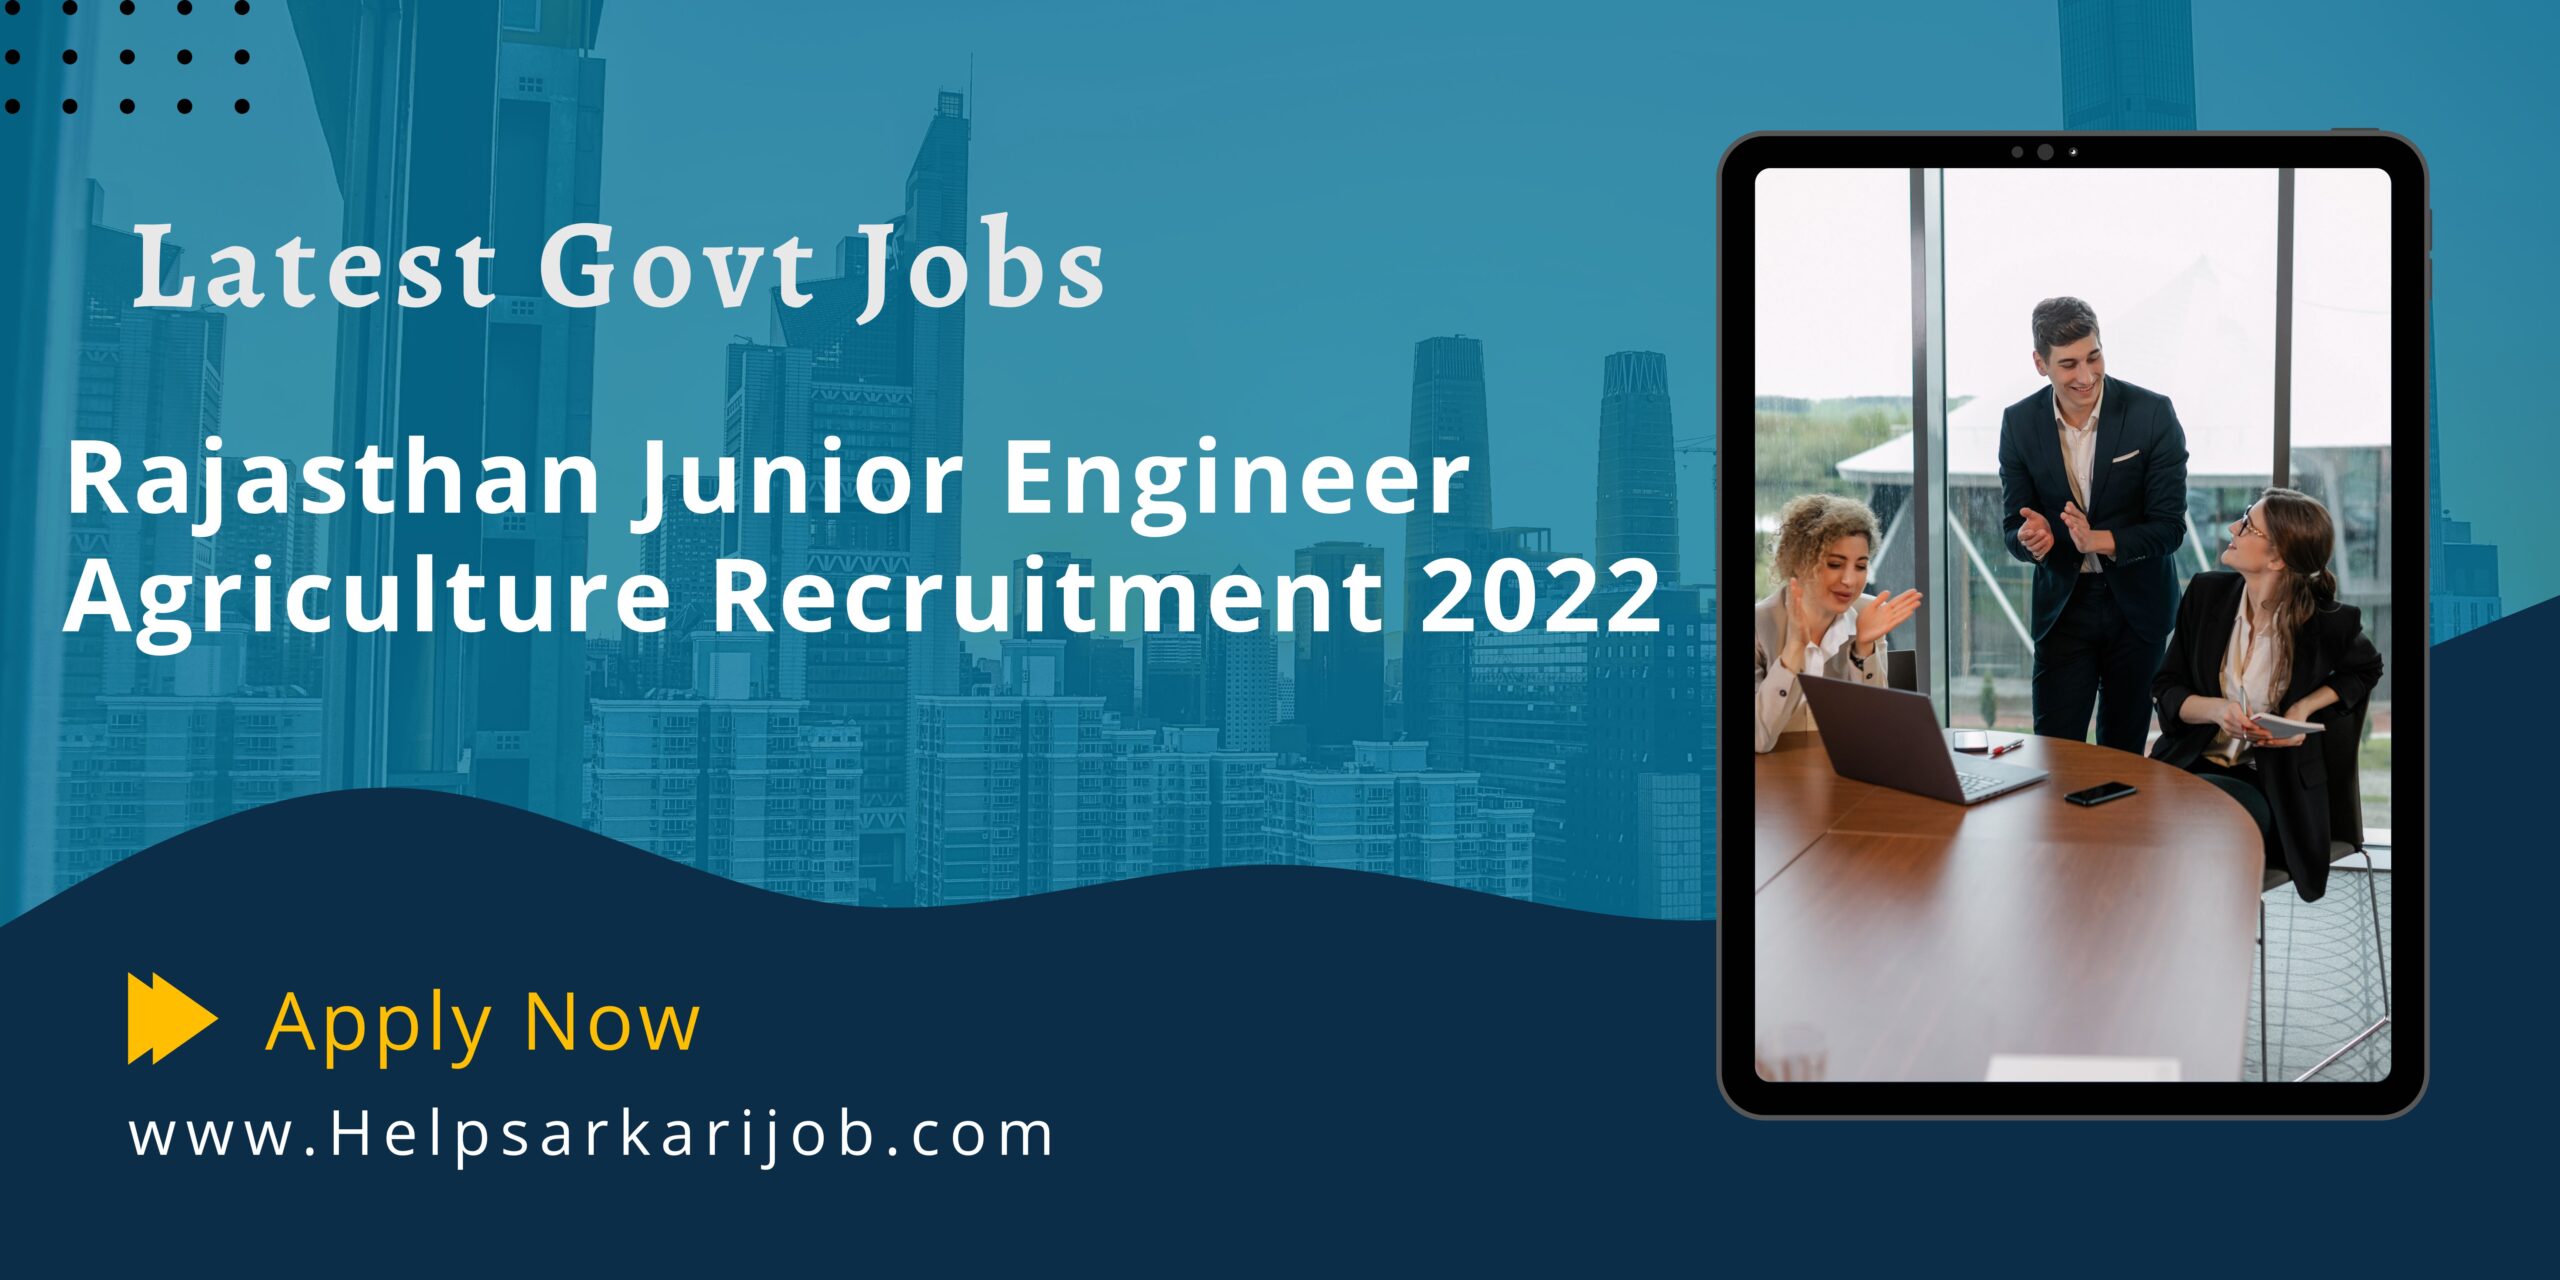 Rajasthan Junior Engineer Agriculture Recruitment 2022